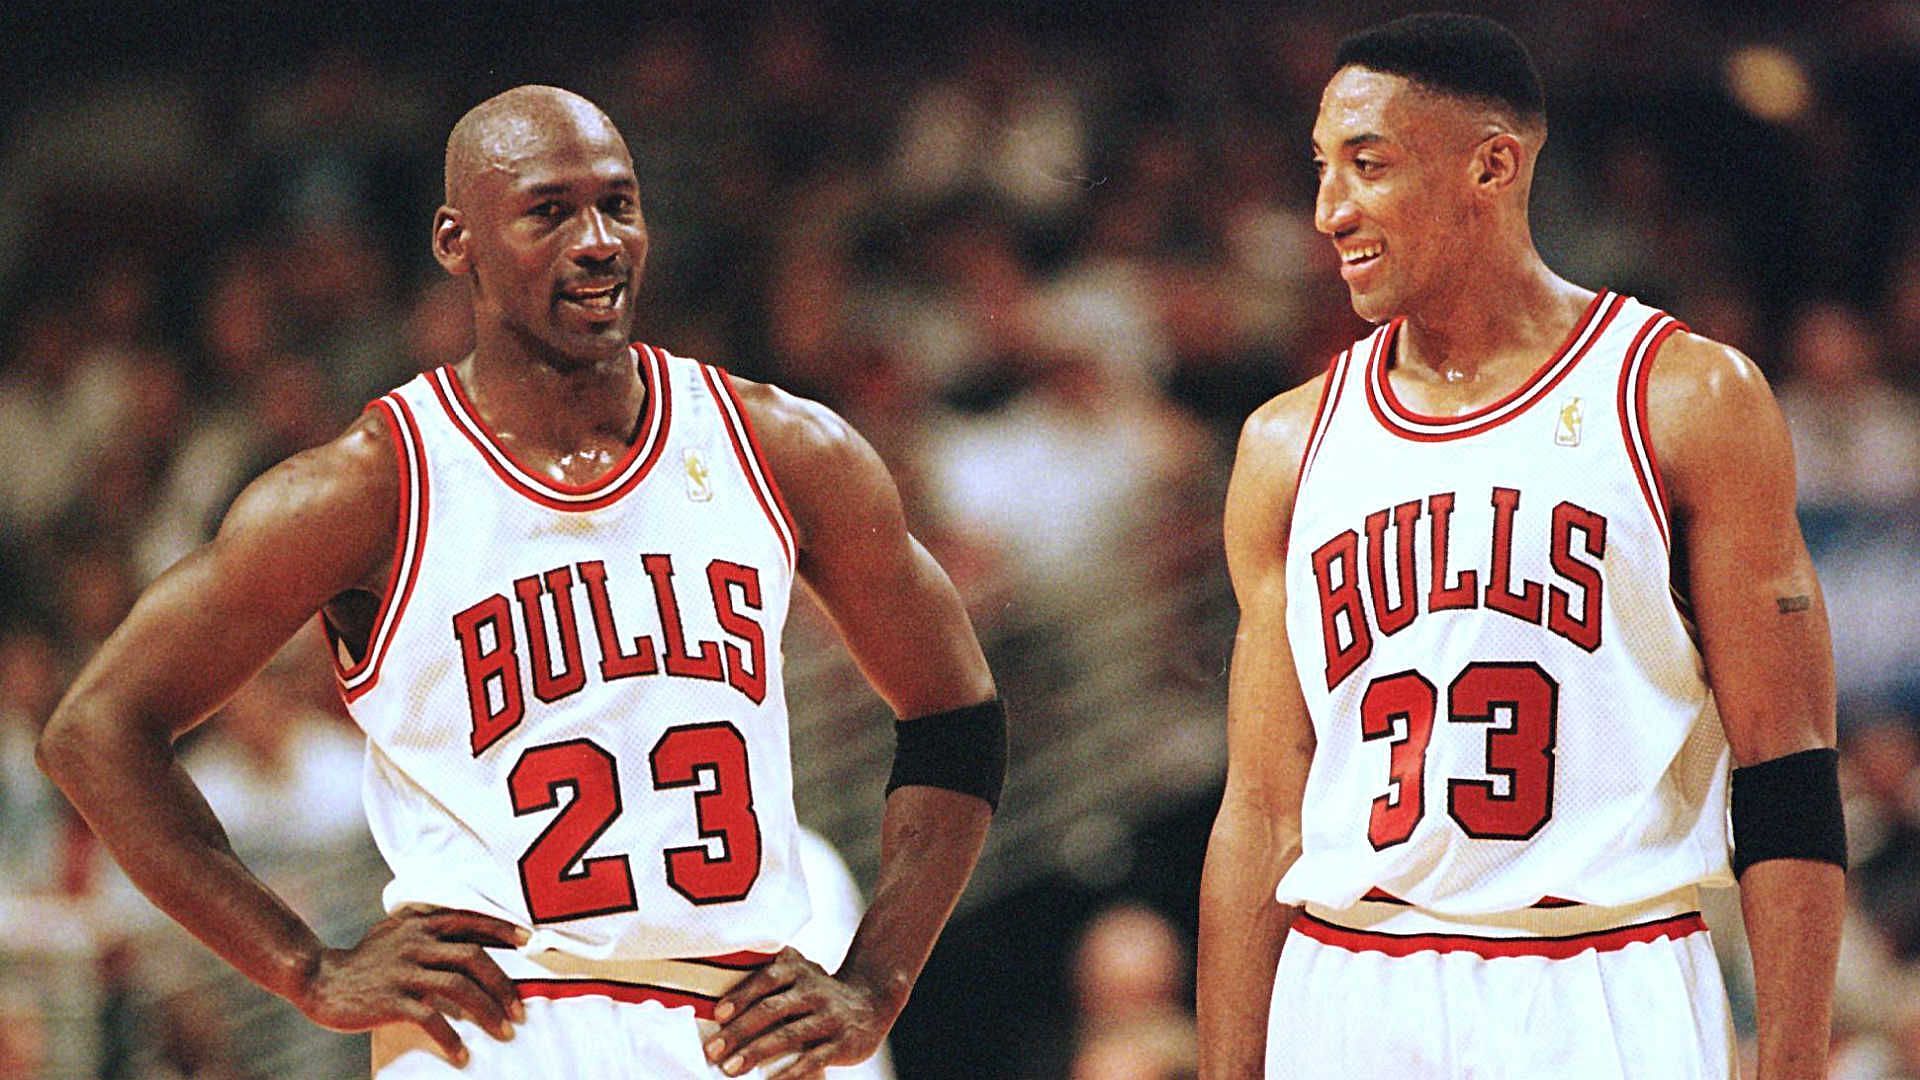 Michael Jordan and Scottie Pippen of the Chicago Bulls